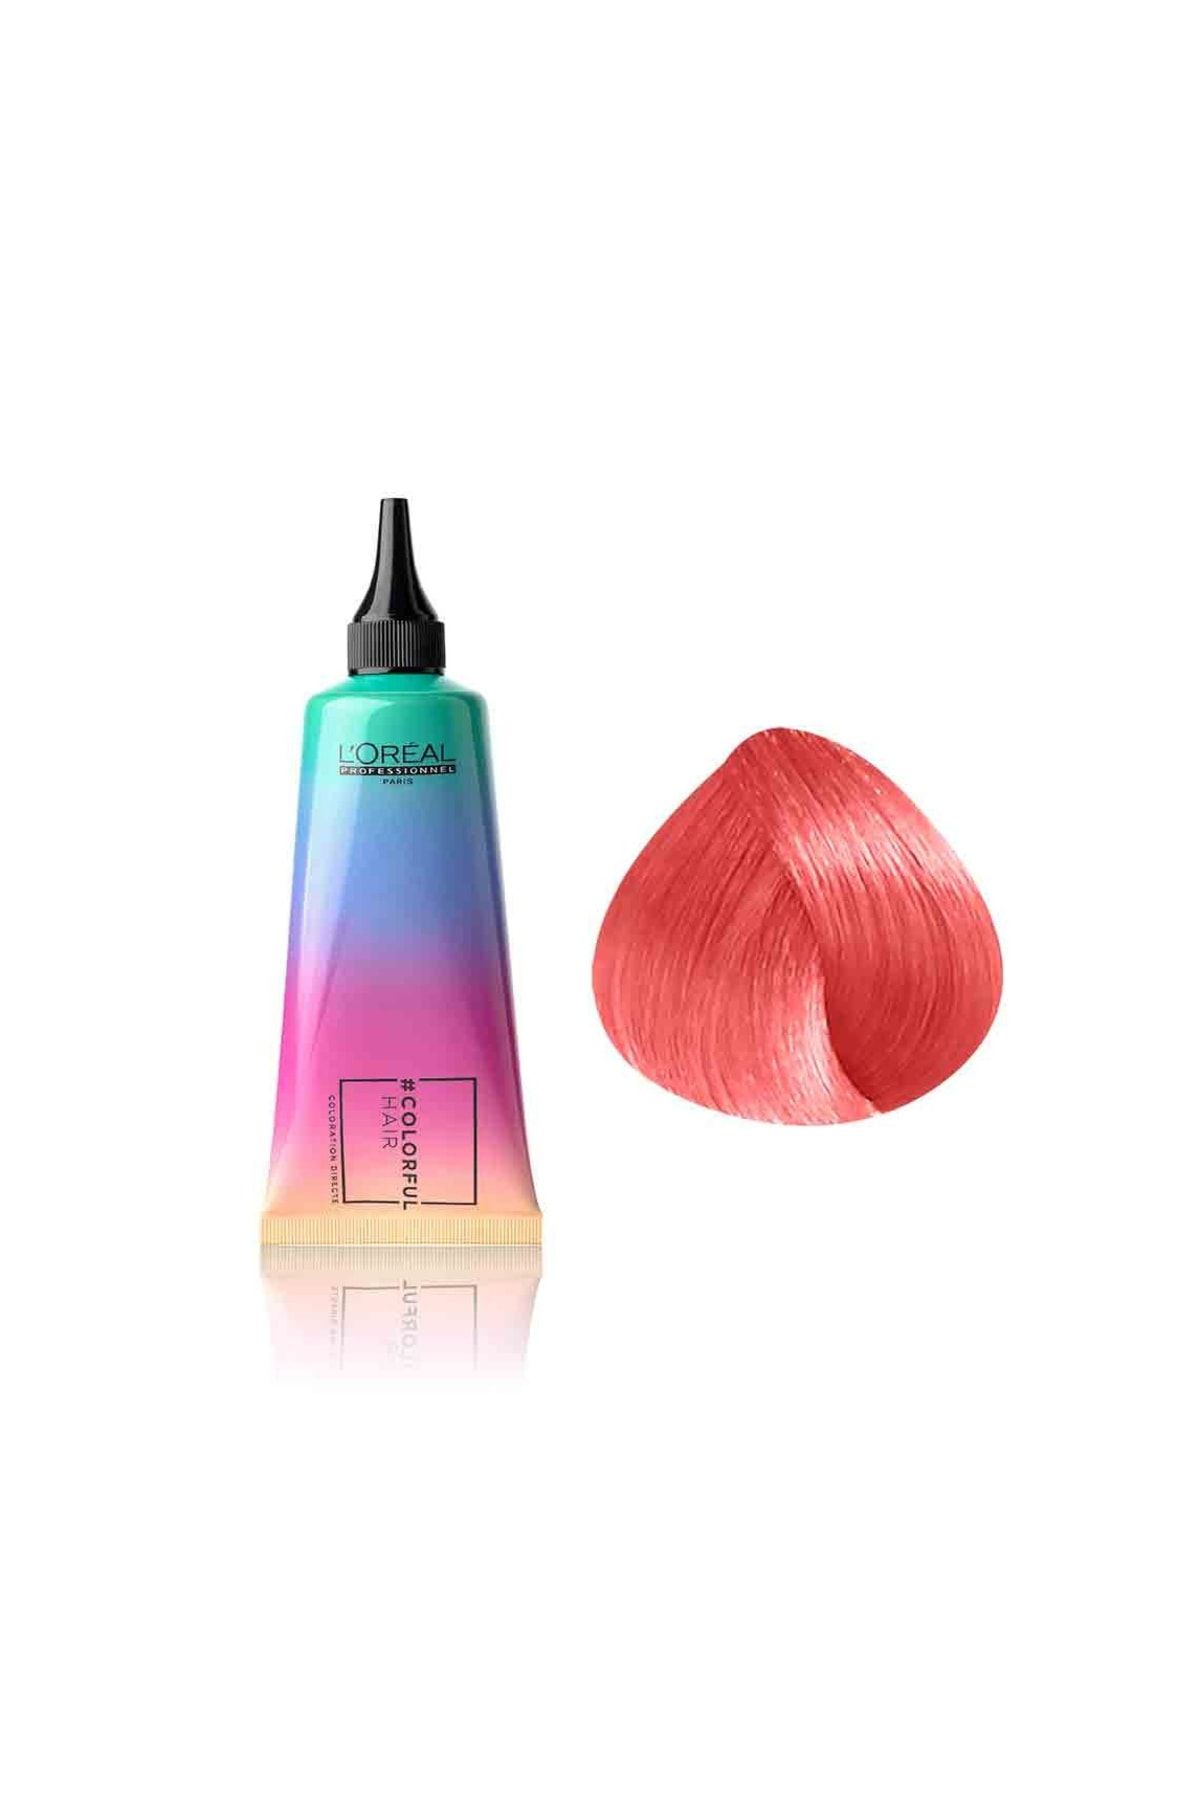 L'oreal Professionnel Colorful Hair Sunset Coral Orange Defined Semi Permament Ammonia Free Hair Color Cream 90ml